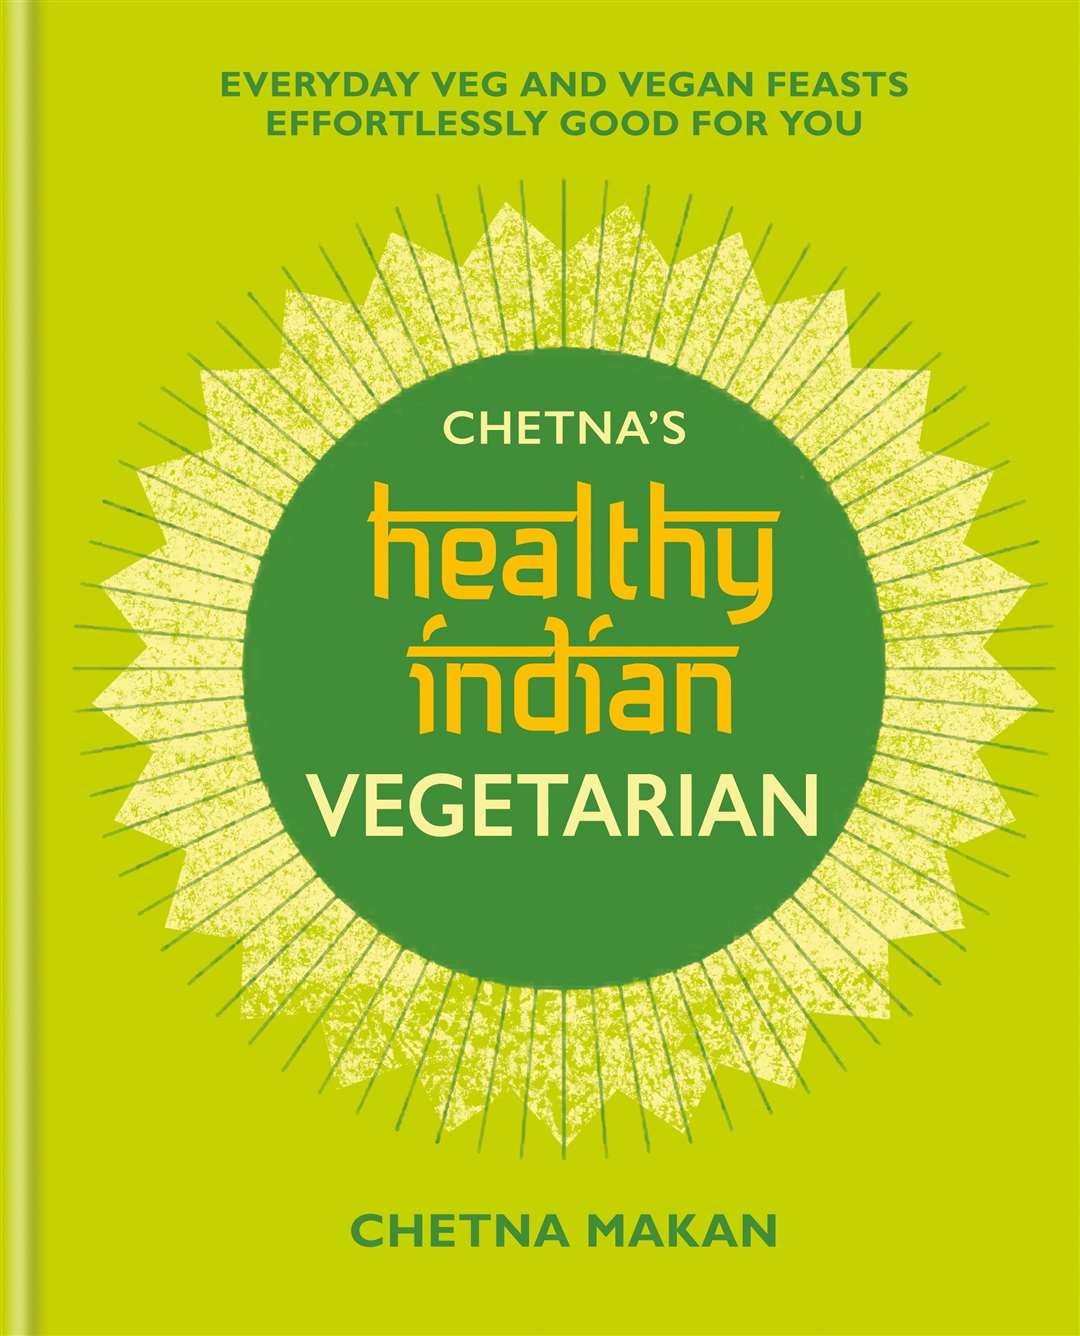 Chetna's Healthy Indian Vegetarian by Chetna Makan.